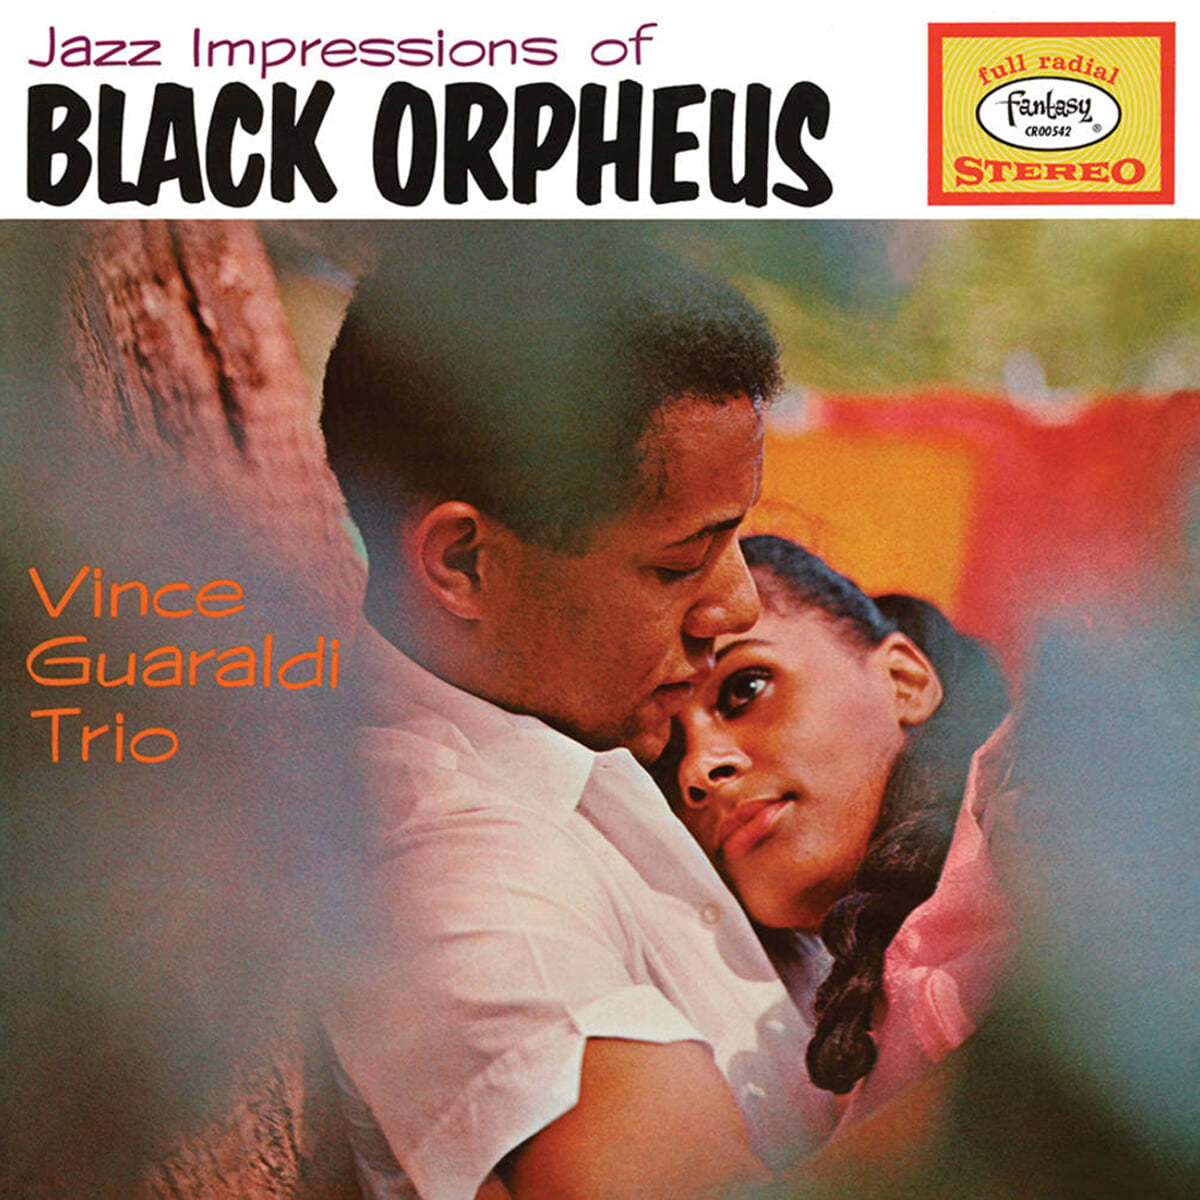 Vince Guaraldi Trio (빈스 과랄디 트리오) - Jazz Impressions of Black Orpheus [Deluxe Edition]